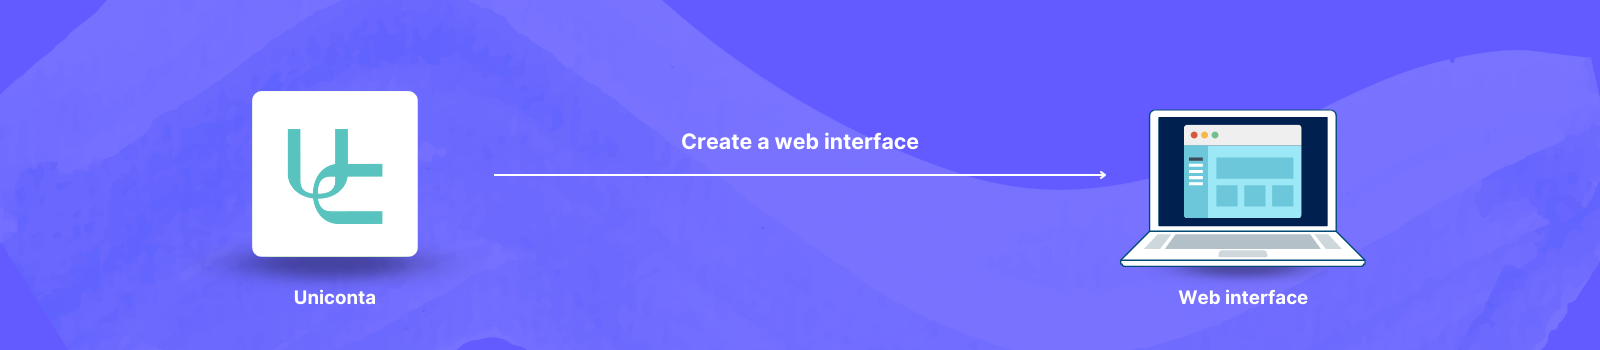 westcoast- uniconta- web-interface.png